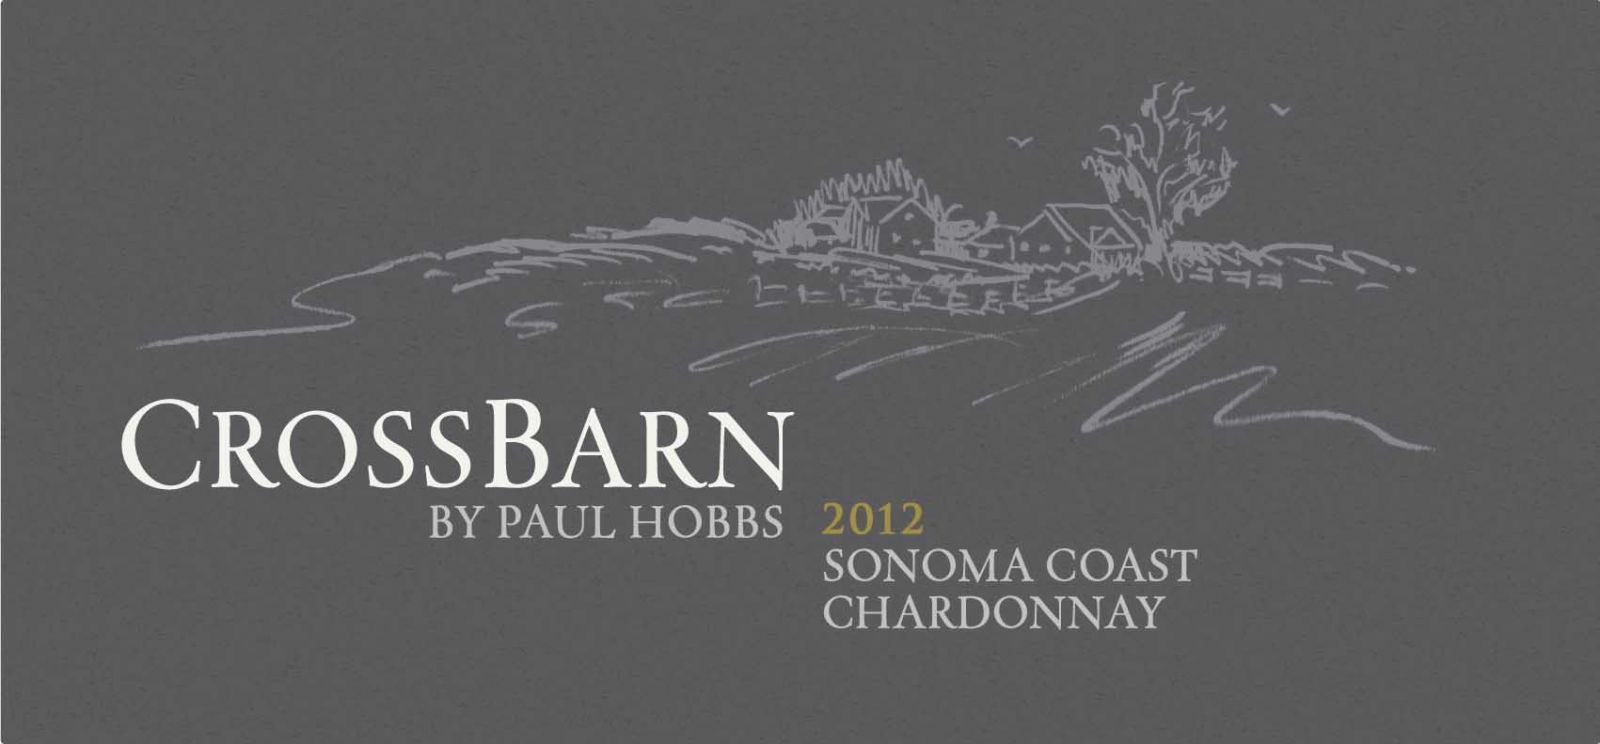 2015 Paul Hobbs Chardonnay Crossbarn Sonoma Coast image